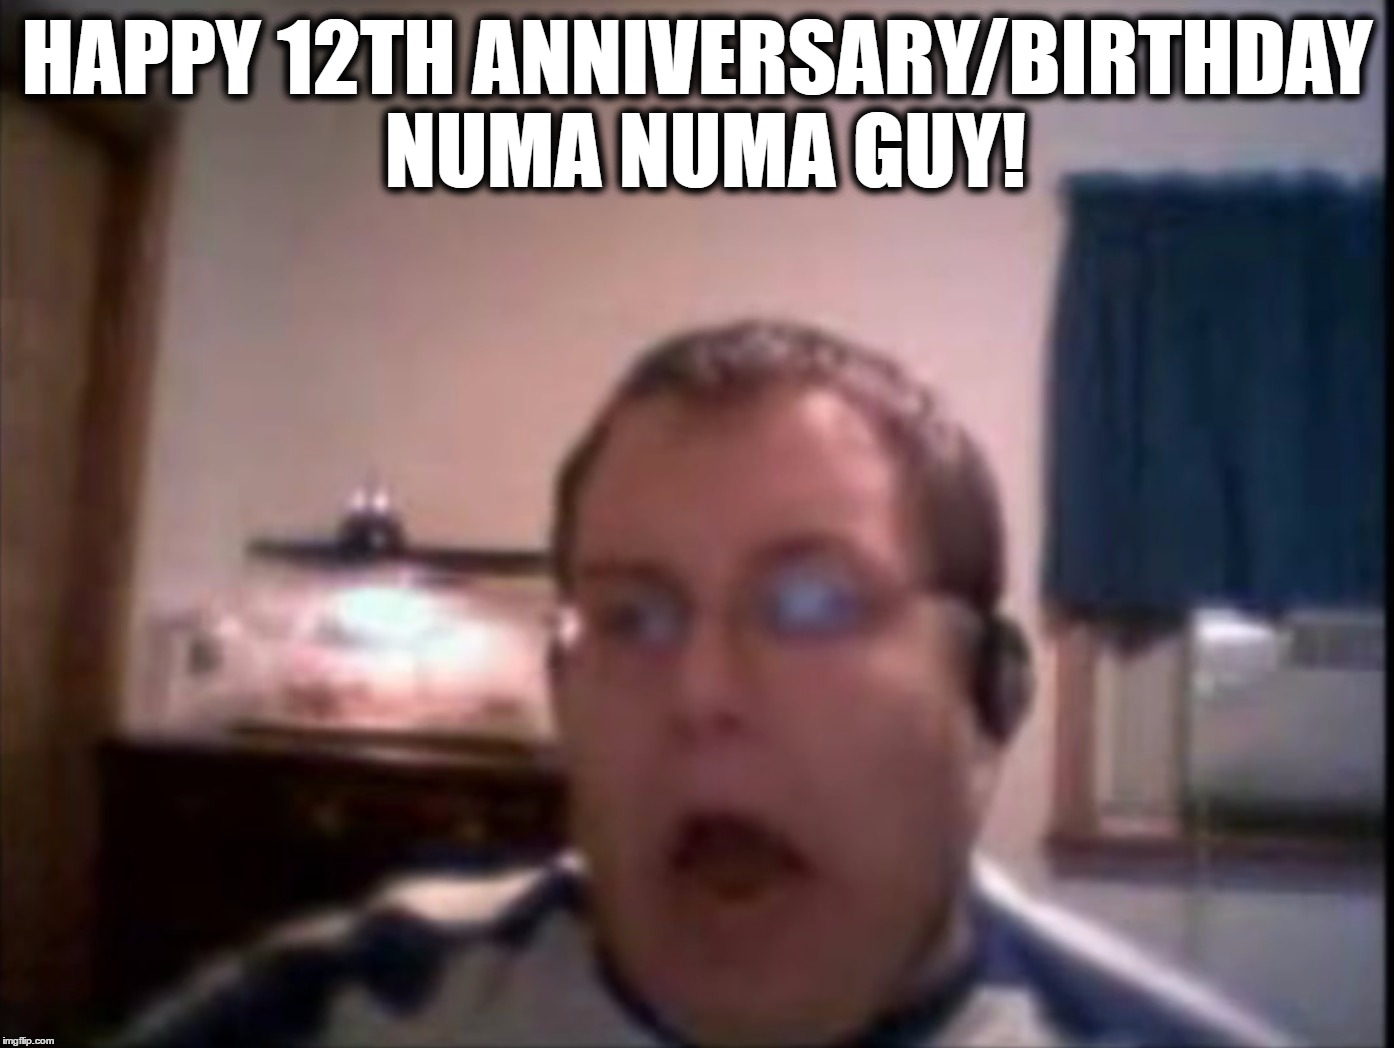 On This Day [December, 6 2004], Numa Numa Guy Made Internet History! | HAPPY 12TH ANNIVERSARY/BIRTHDAY NUMA NUMA GUY! | image tagged in numa numa guy,memes,funny,newgrounds,o-zone,dragostea din tei | made w/ Imgflip meme maker